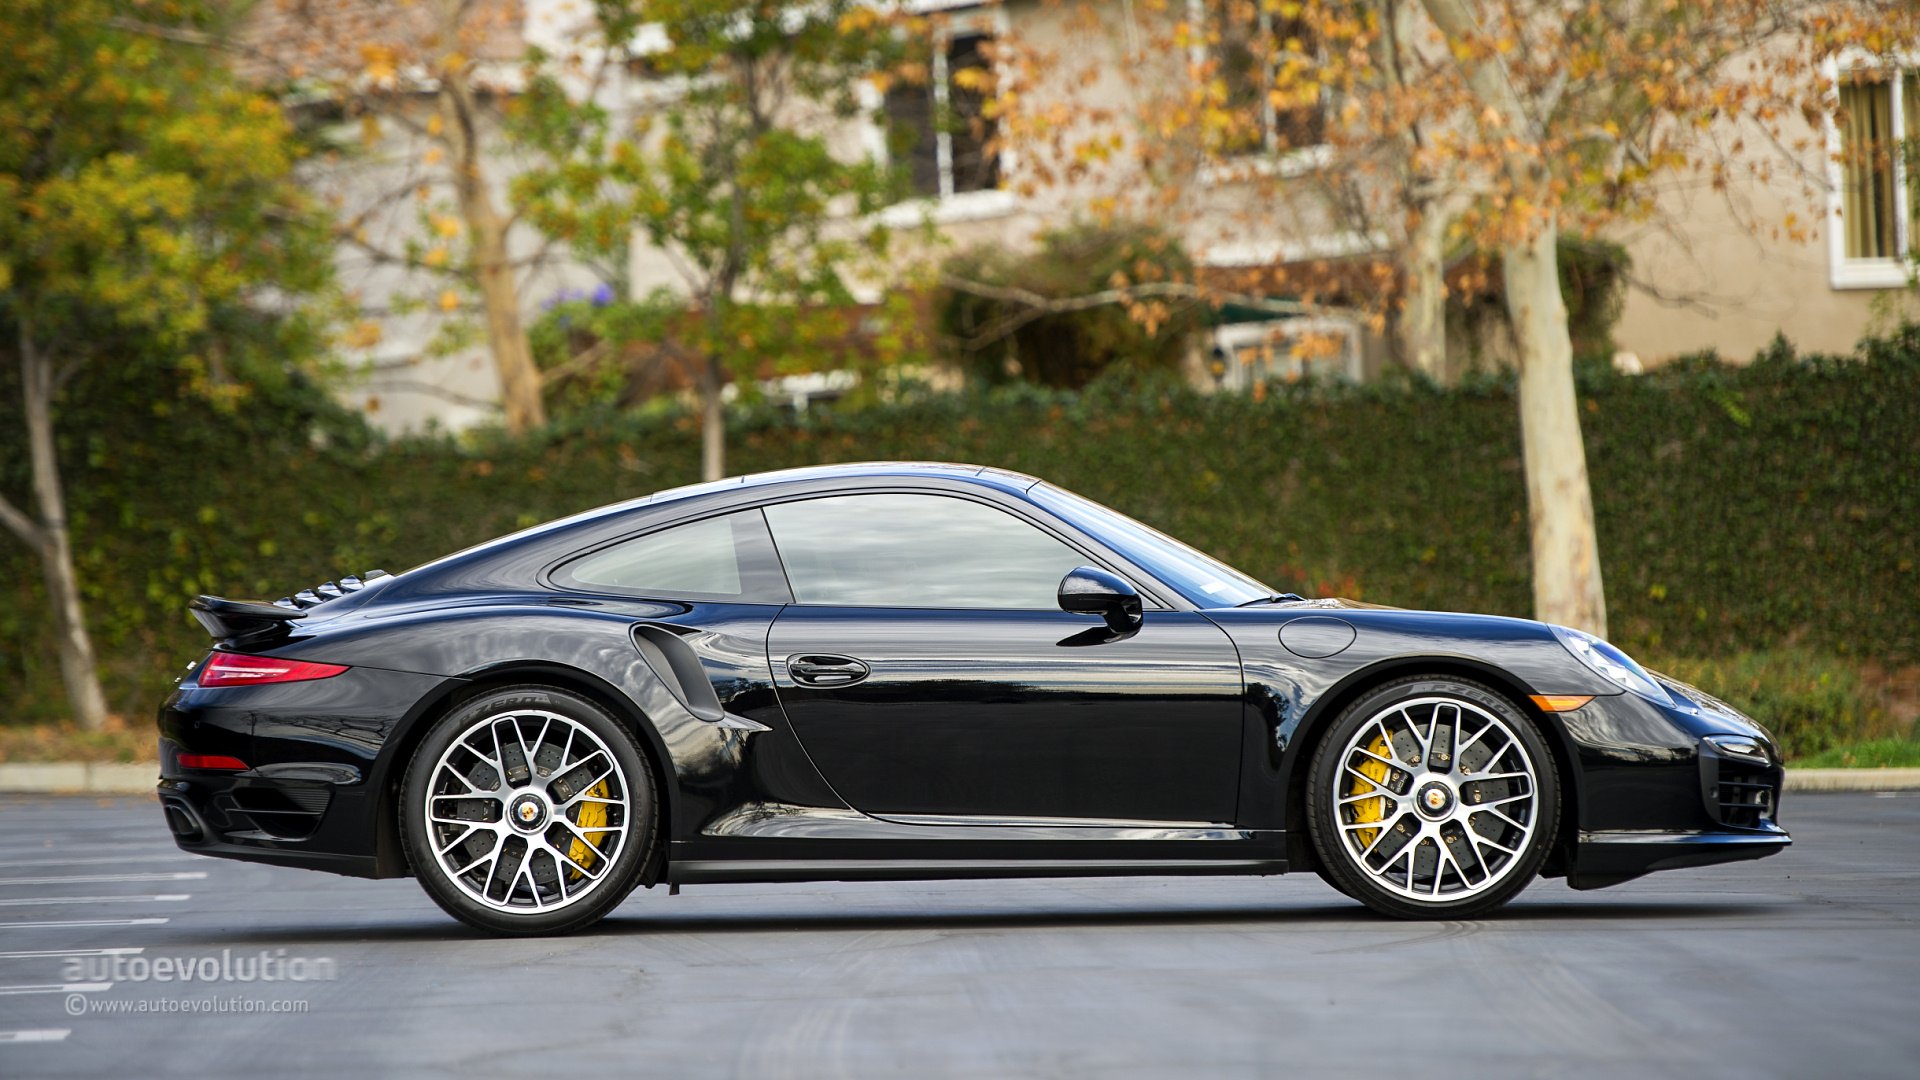 2014, Porsche, 911, 991, Turbo s, Coupe, Cars Wallpaper